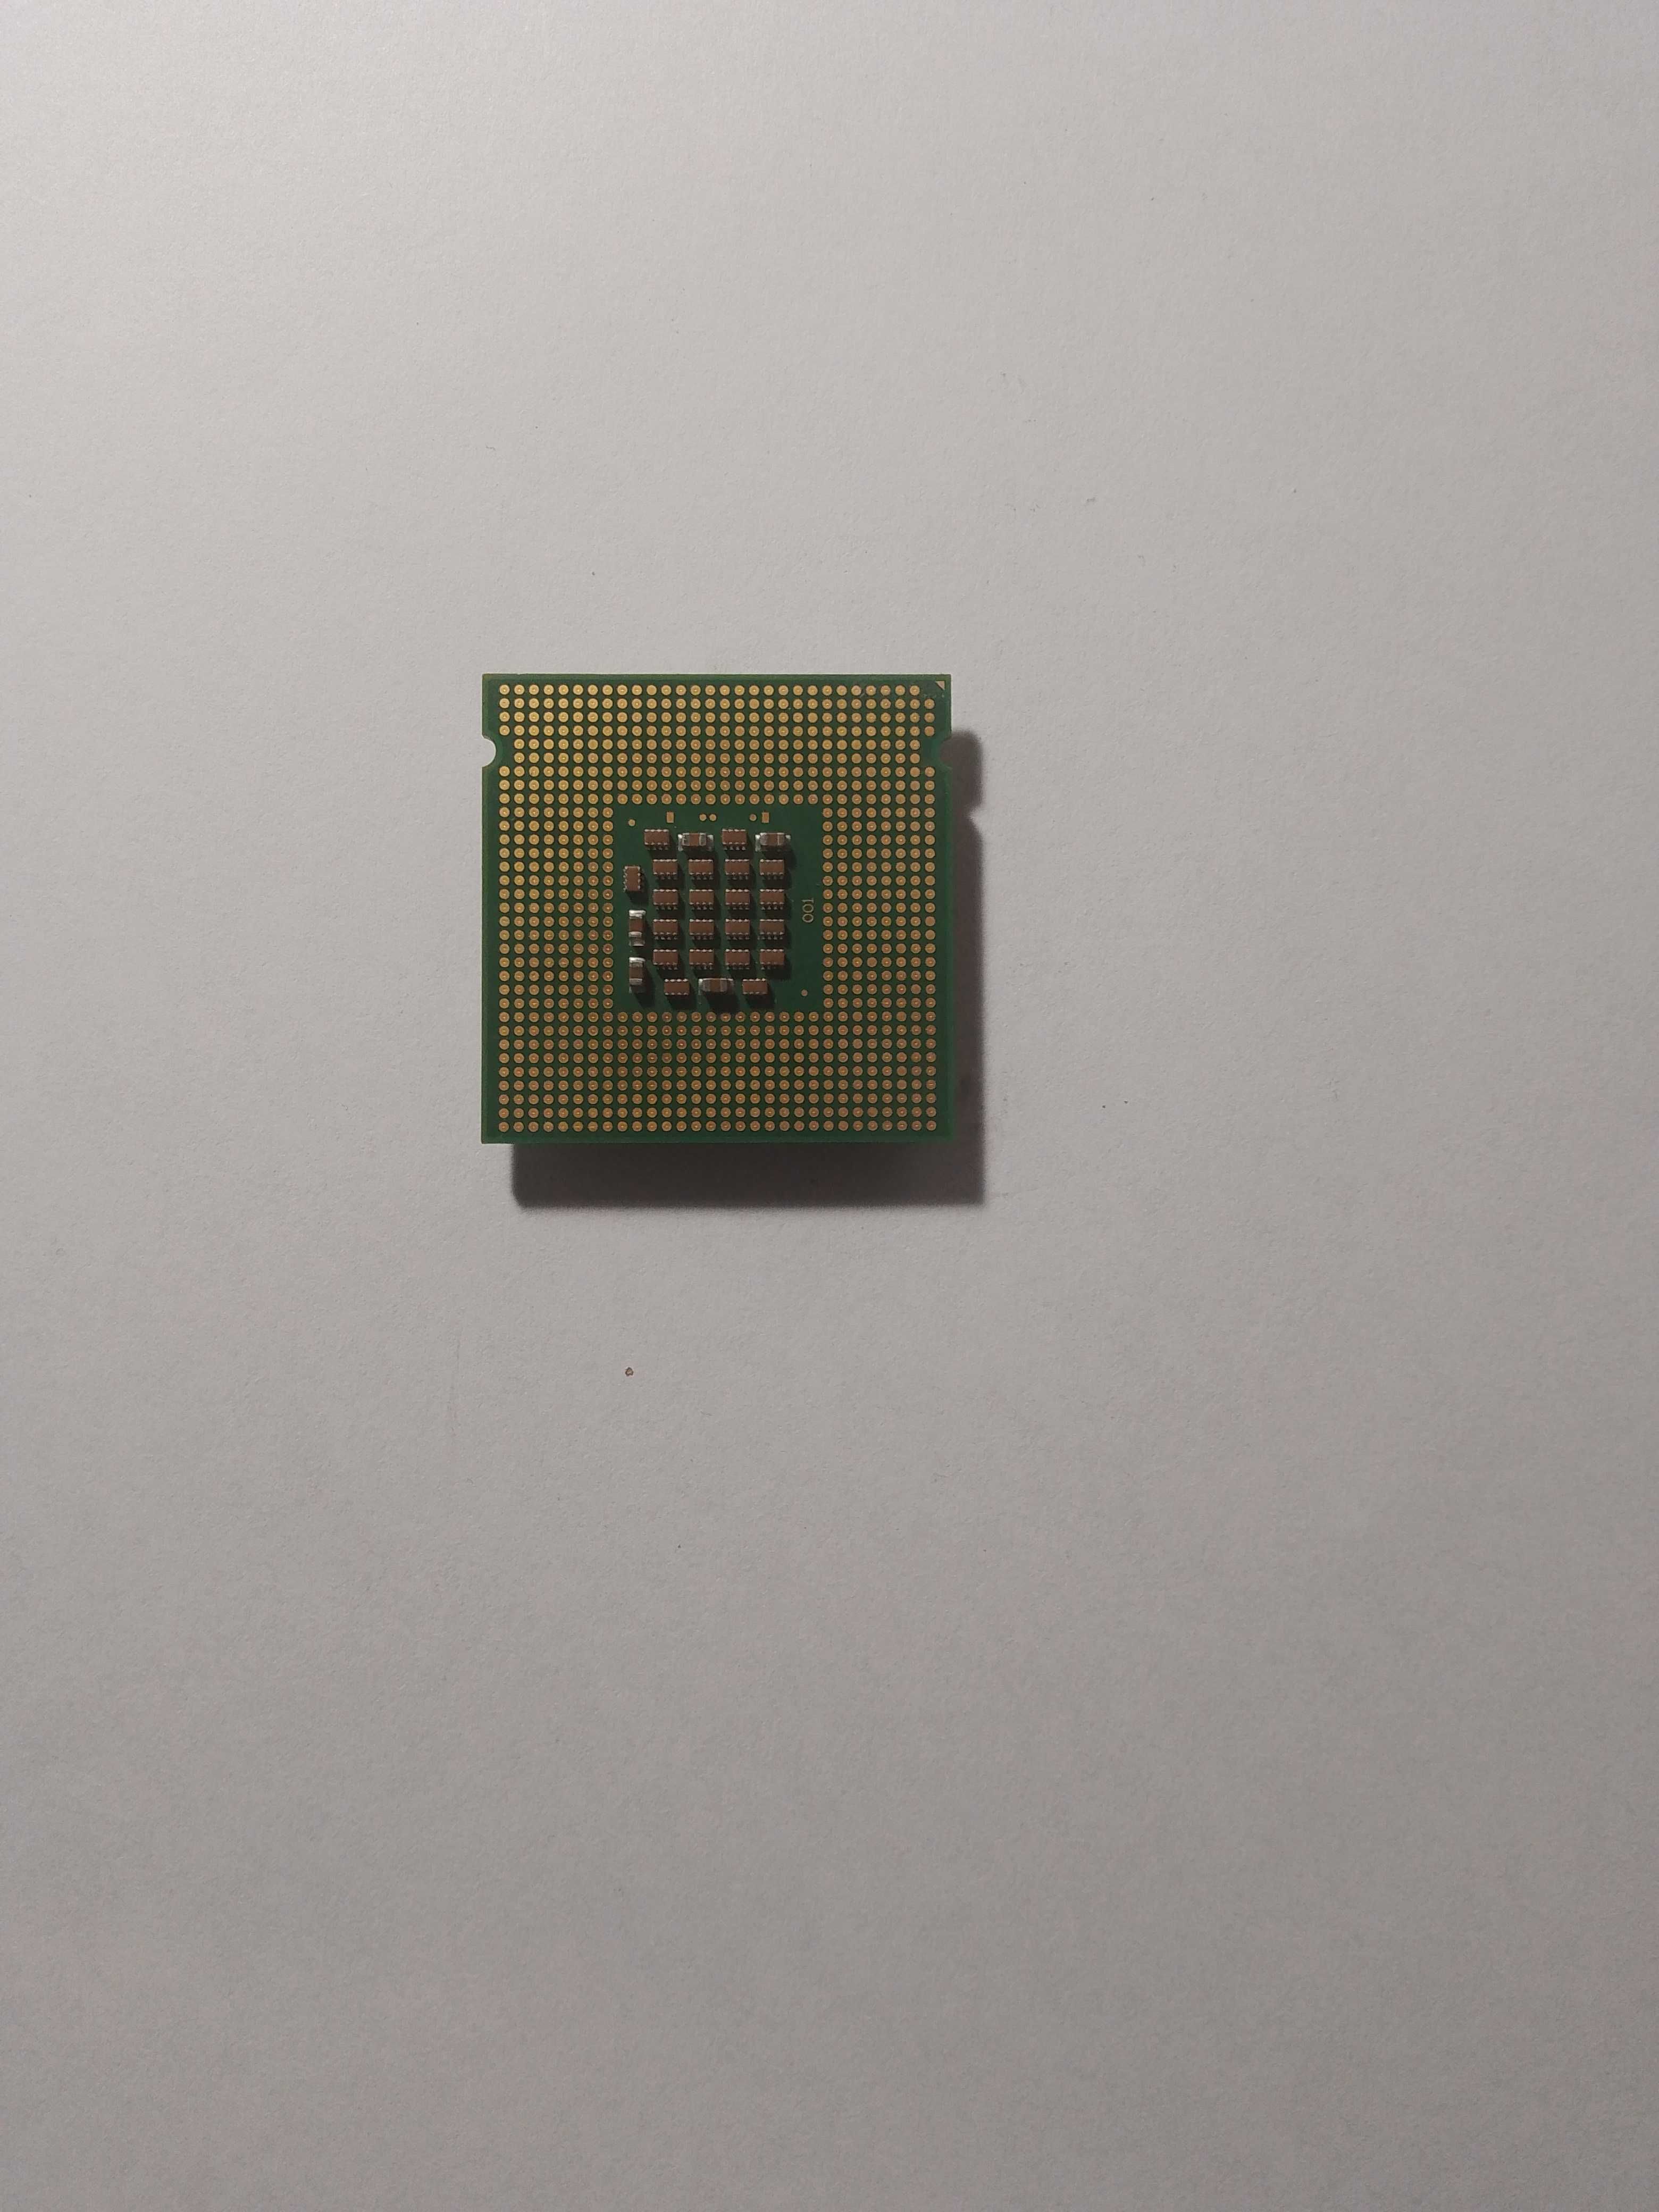 Procesor Intel Pentium 4, 2.8 GHz